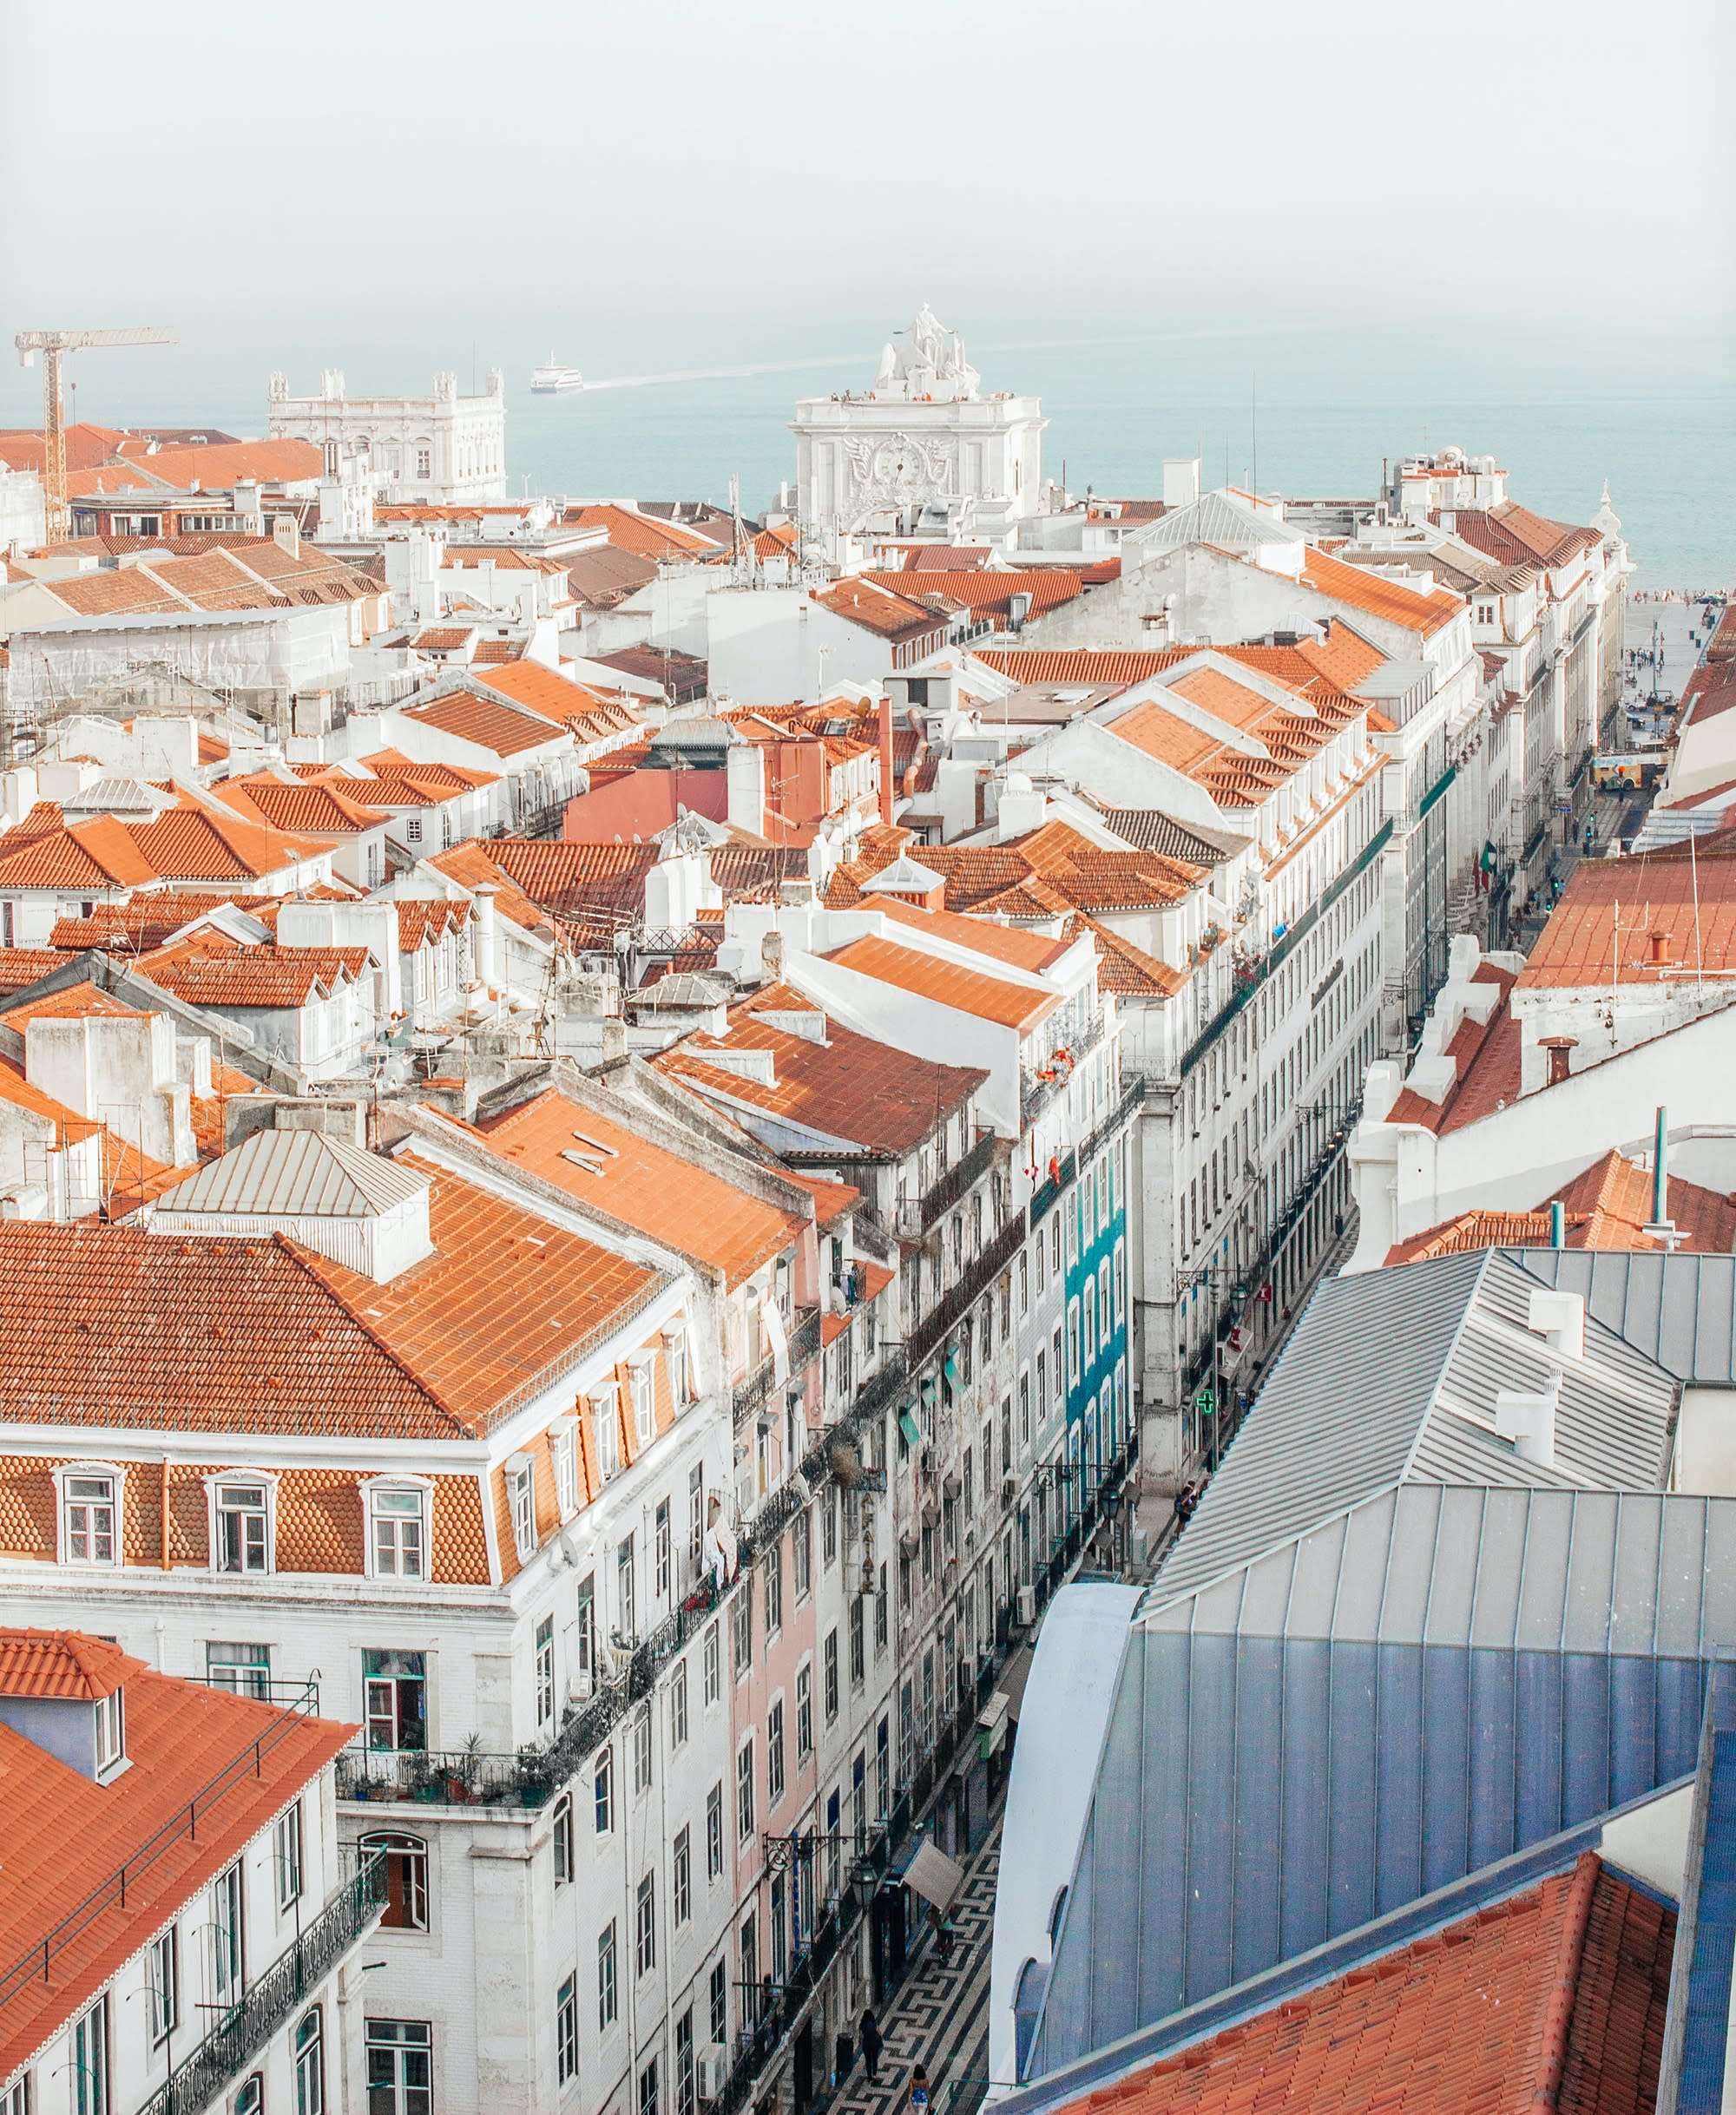 Tenement houses in Lisbon